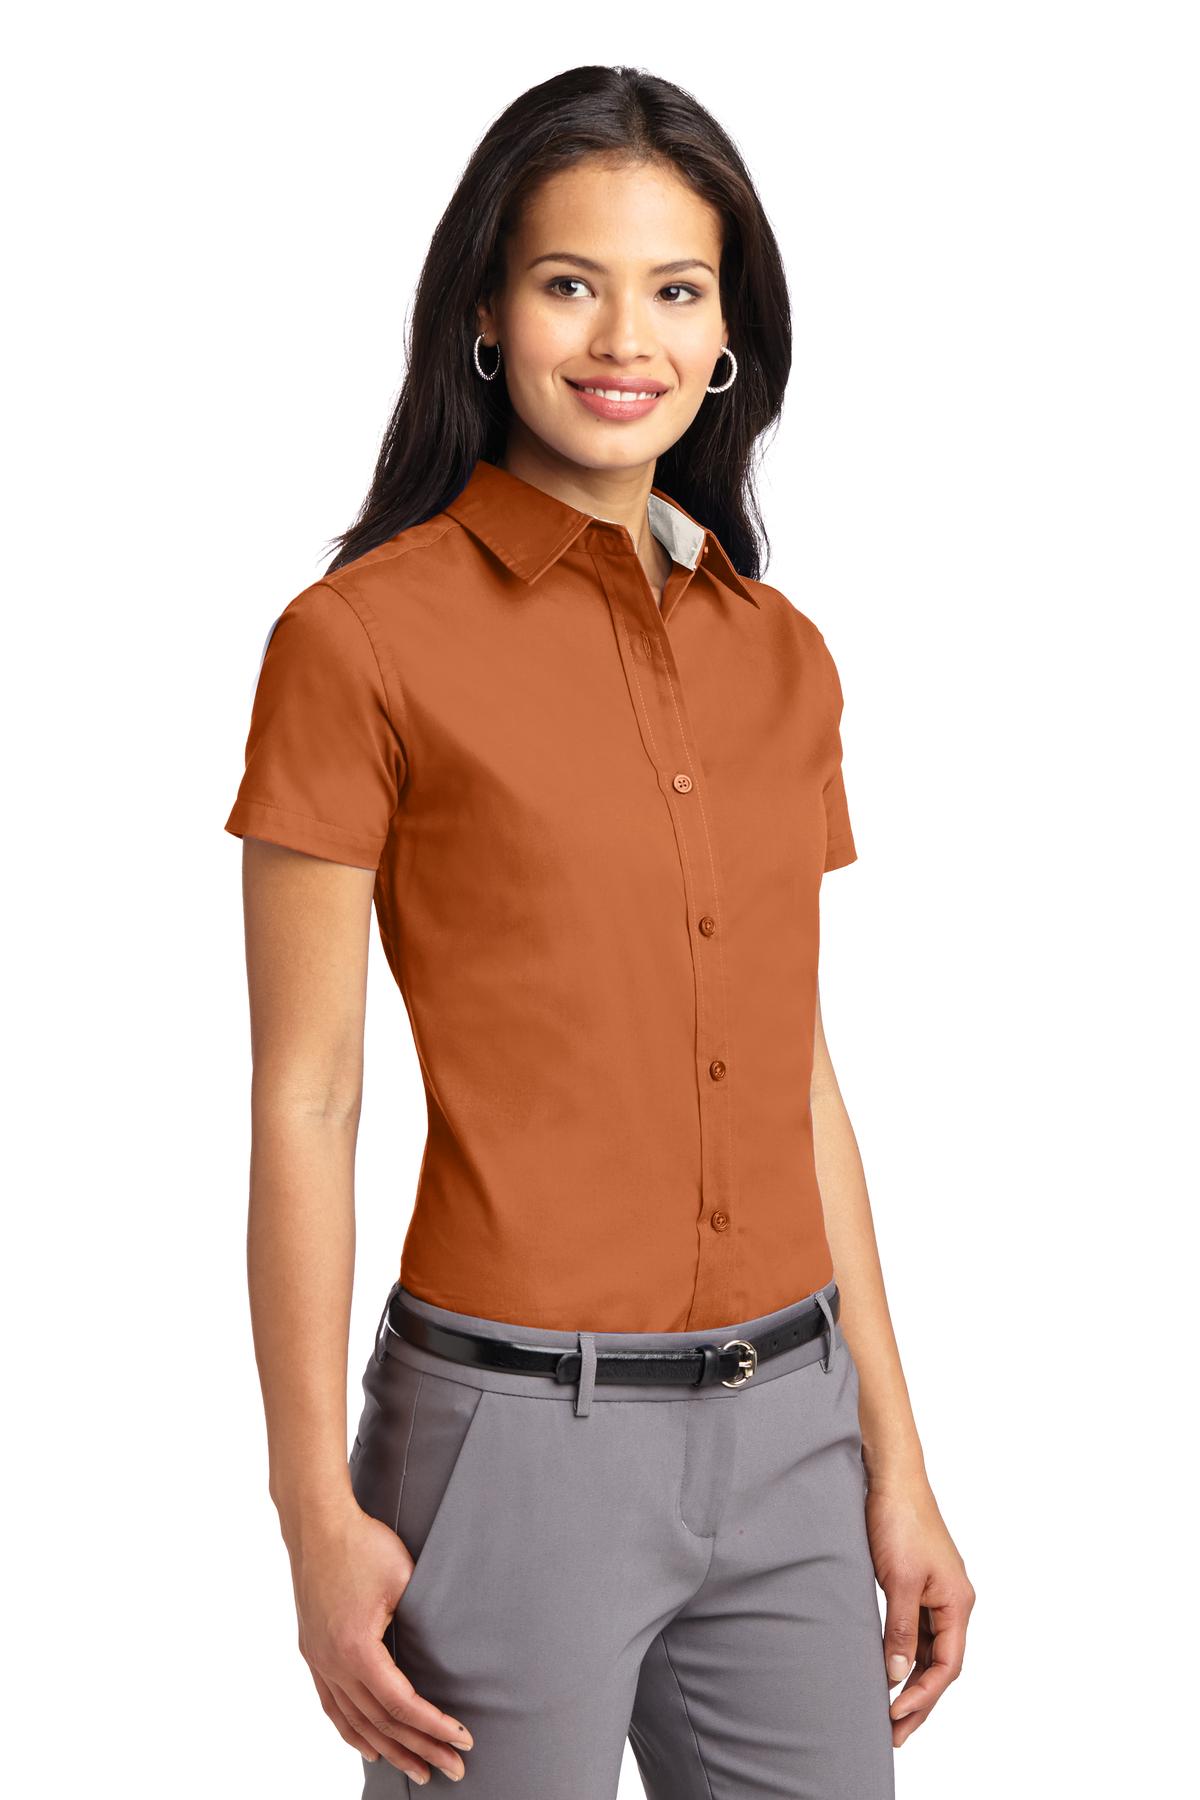 Port Authority Ladies Short Sleeve Easy Care Shirt-XS (Texas Orange/Light Stone) - image 4 of 6